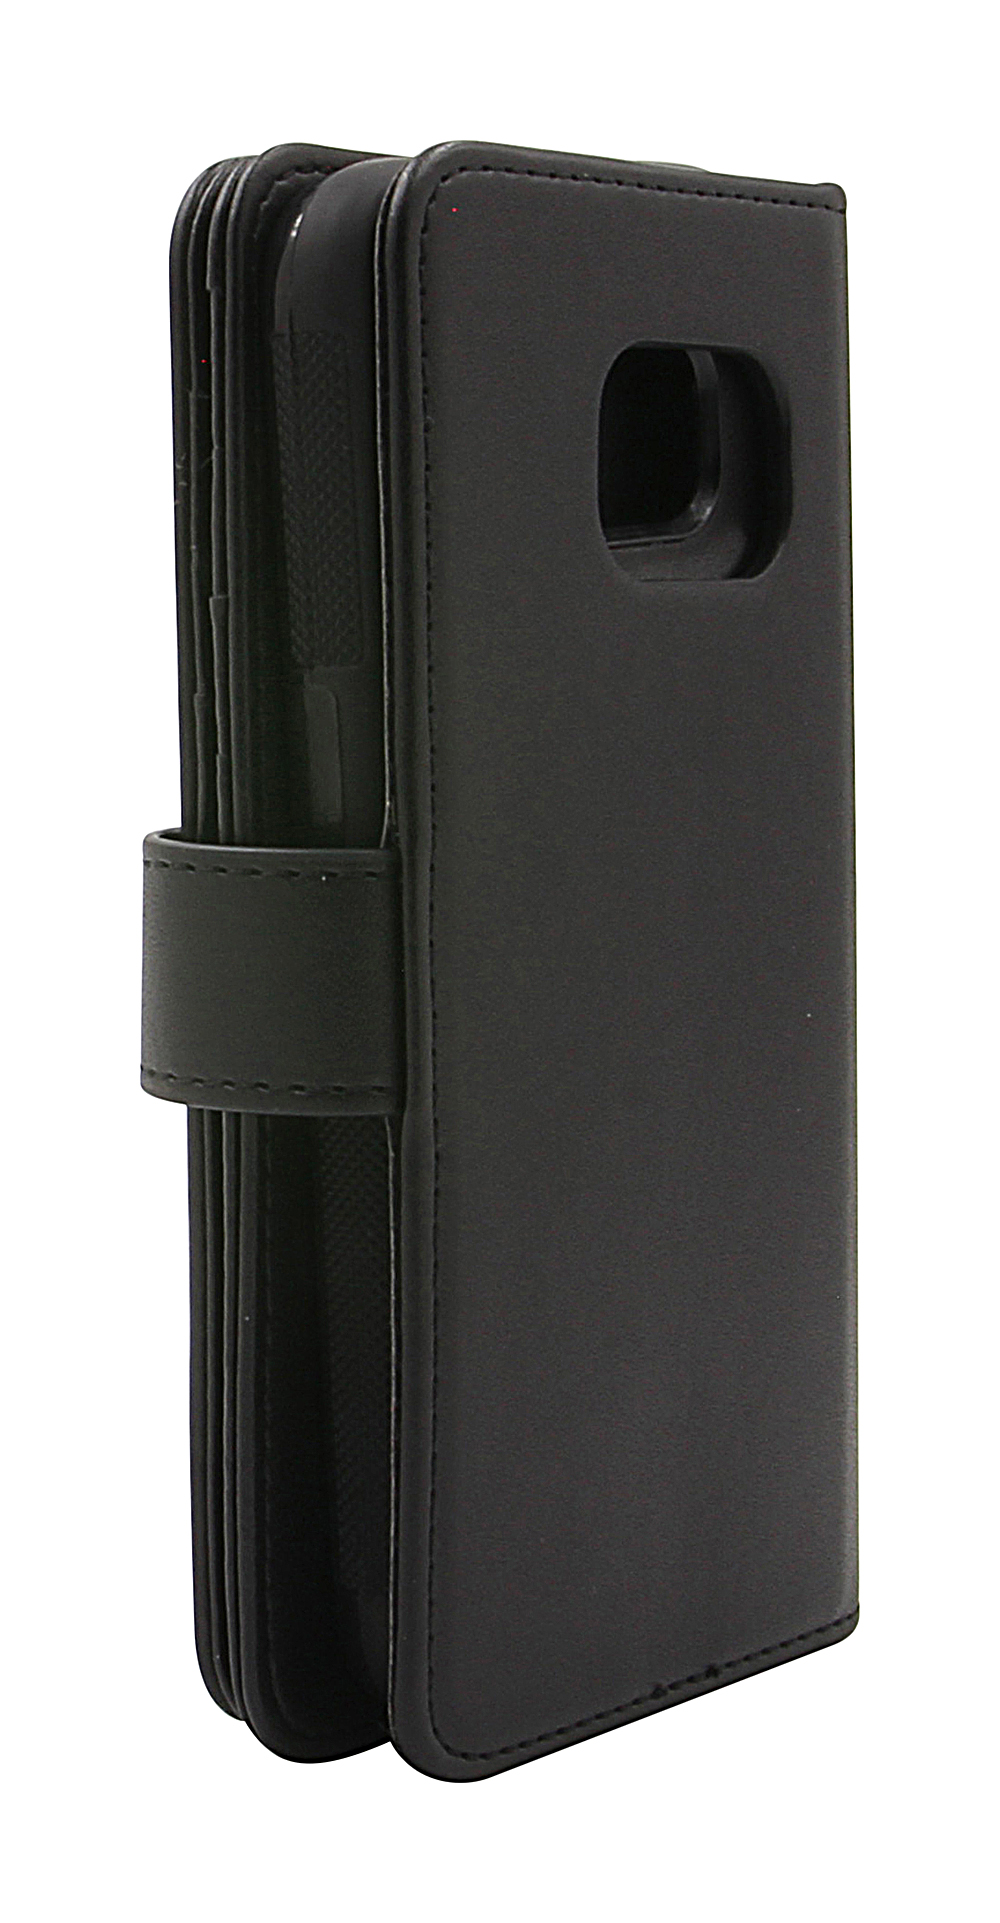 CoverInSkimblocker XL Magnet Fodral Samsung Galaxy S7 (G930F)